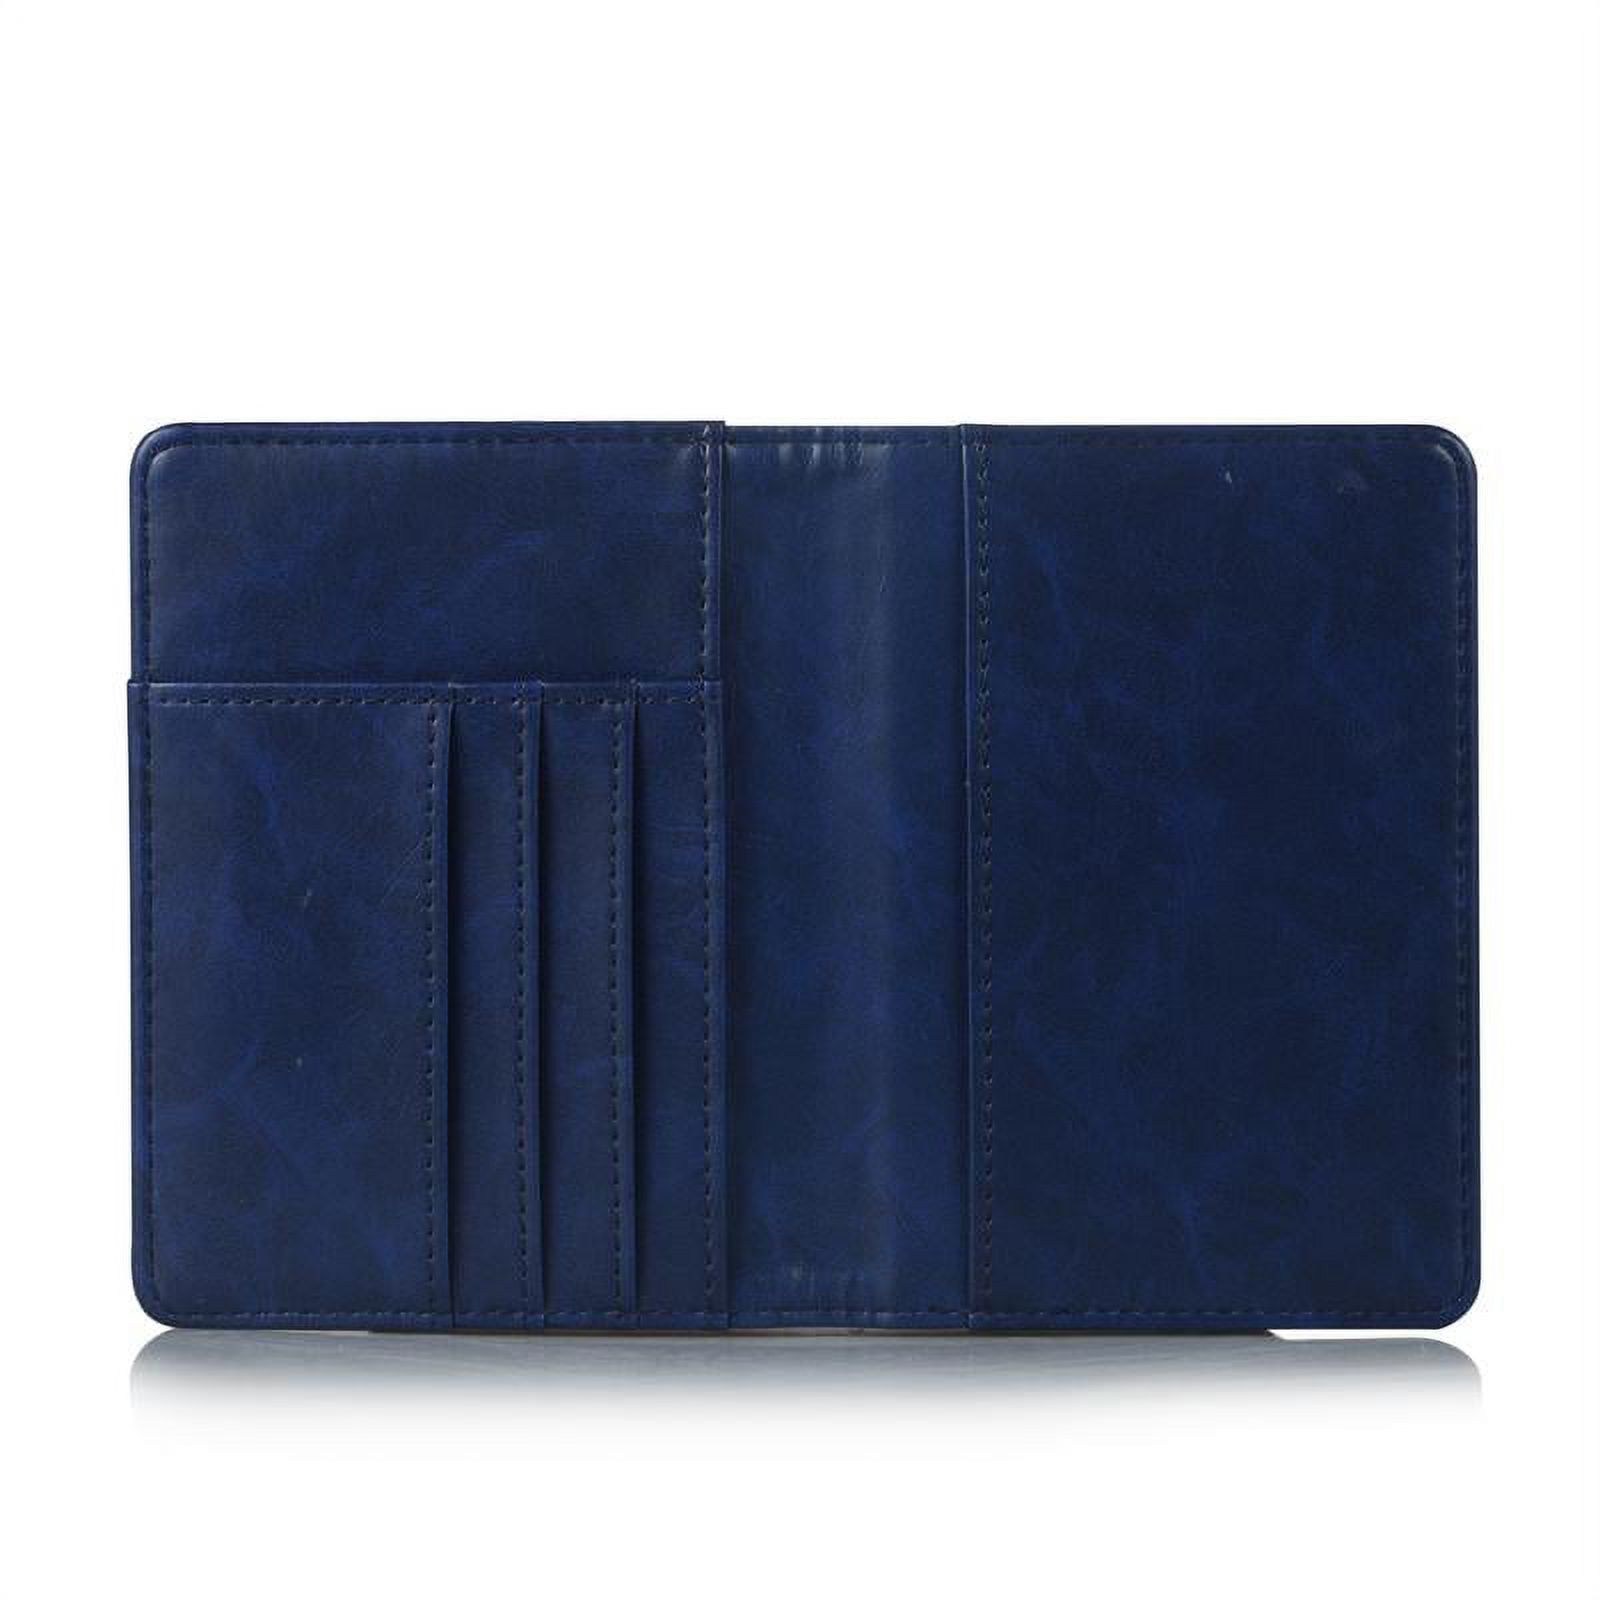 Passport Holder Travel Wallet RFID Blocking Case Cover, EpicGadget Premium PU Leather Passport Holder Travel Wallet Cover Case (Navy Blue) - image 2 of 4